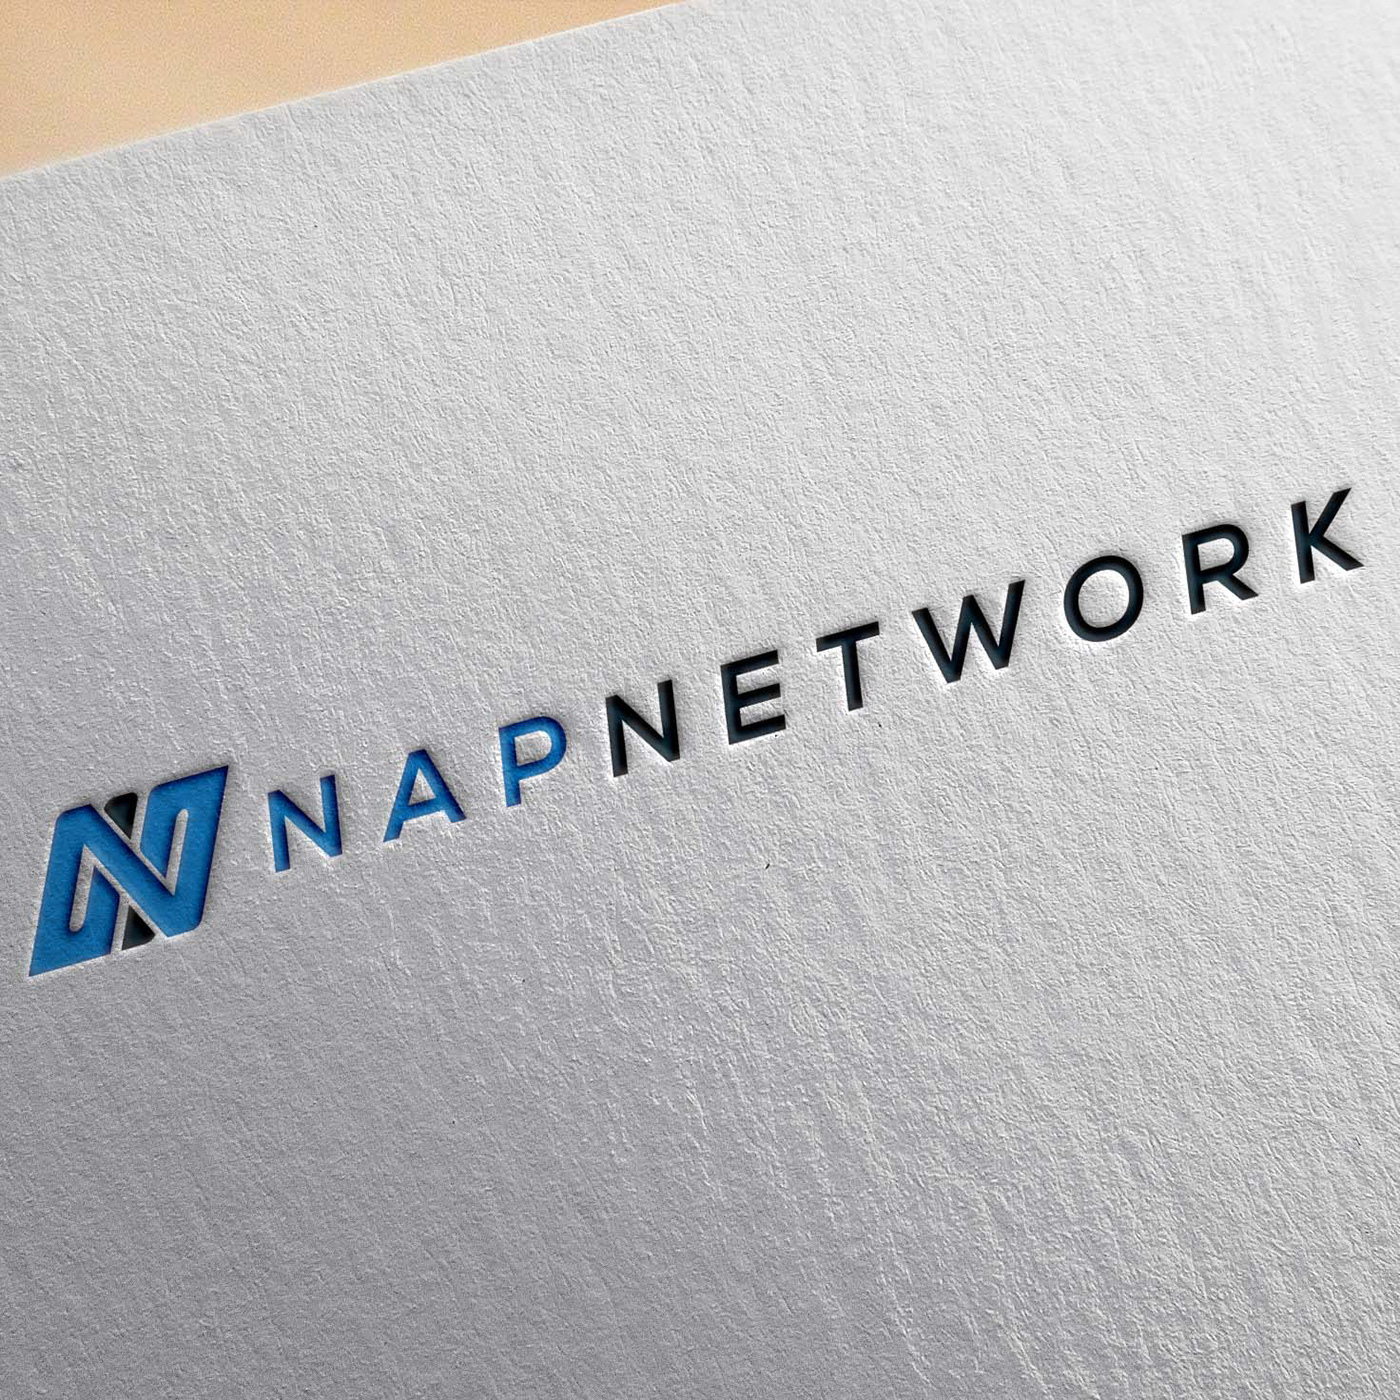 logo branding  network N letter a letter nap networking tech Technology news